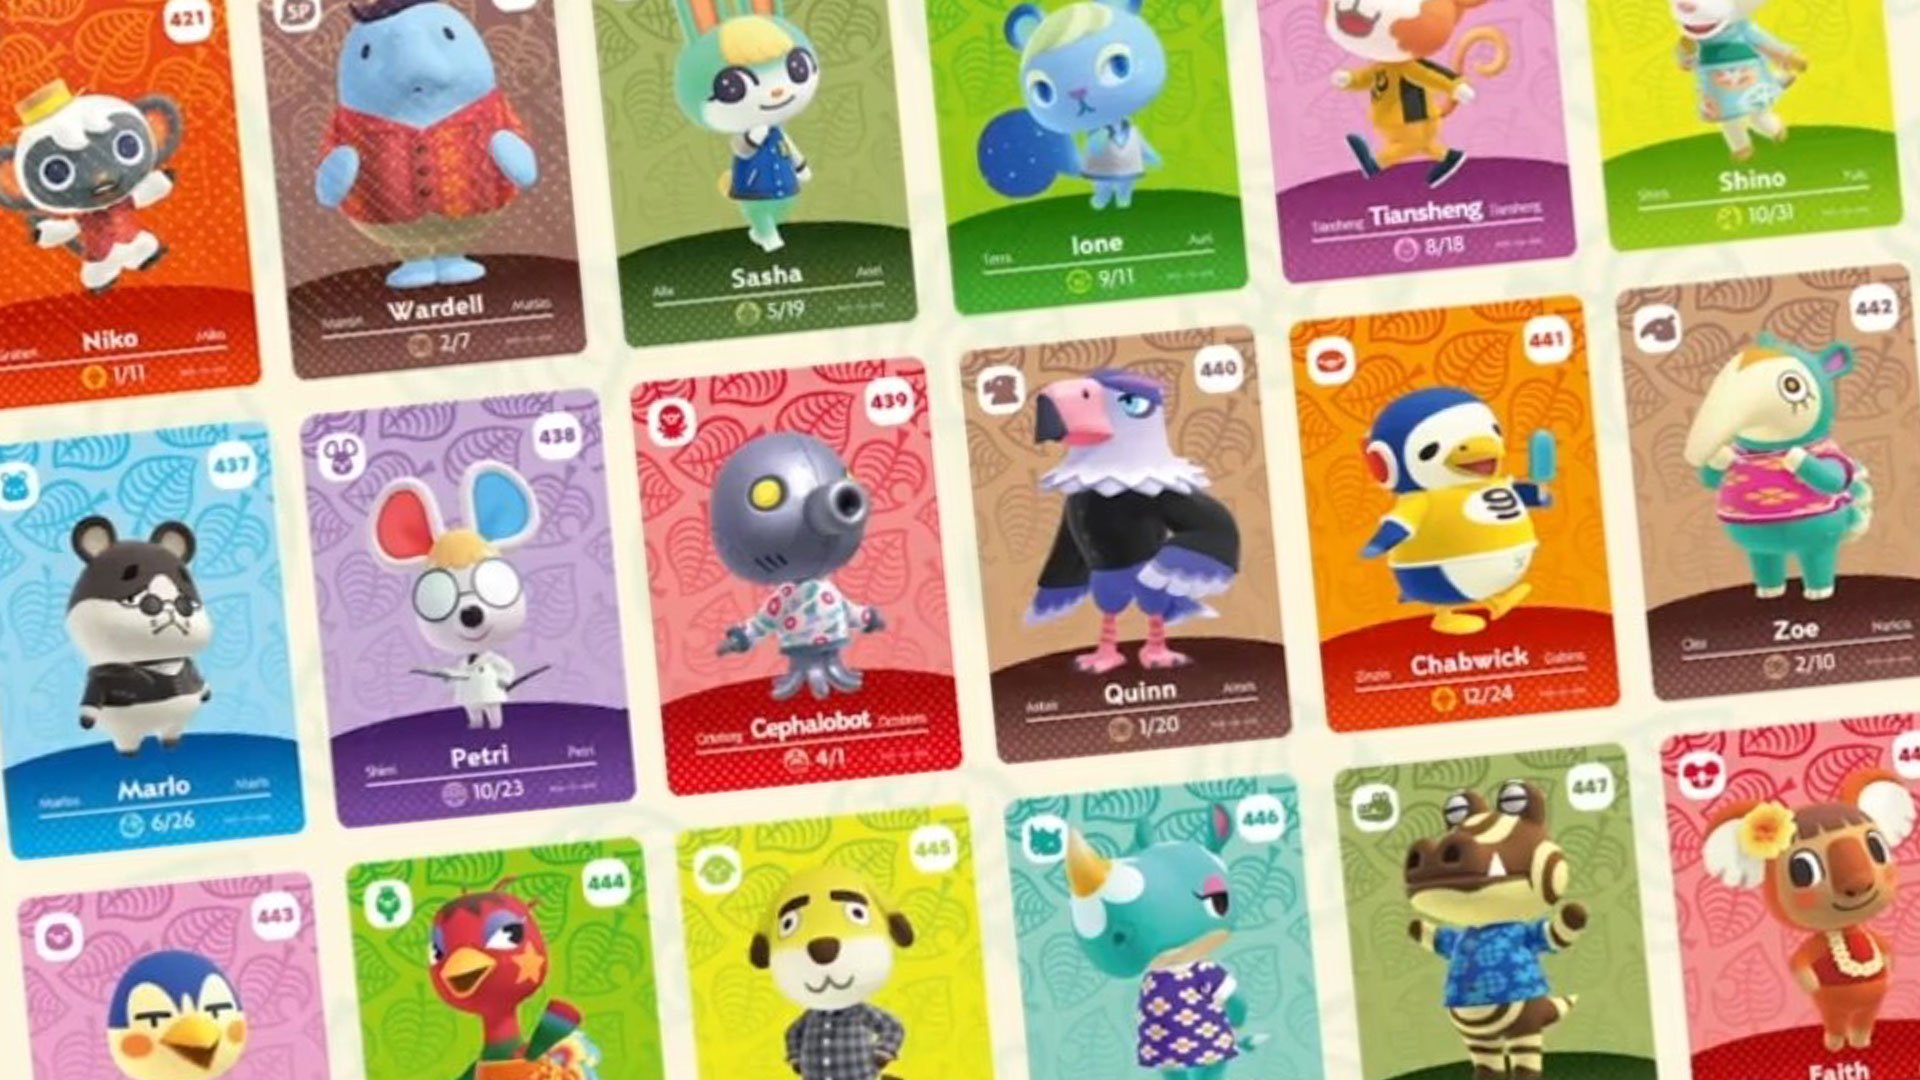 Full List of Animal Crossing Series 5 amiibo Cards - Nintendo Wire